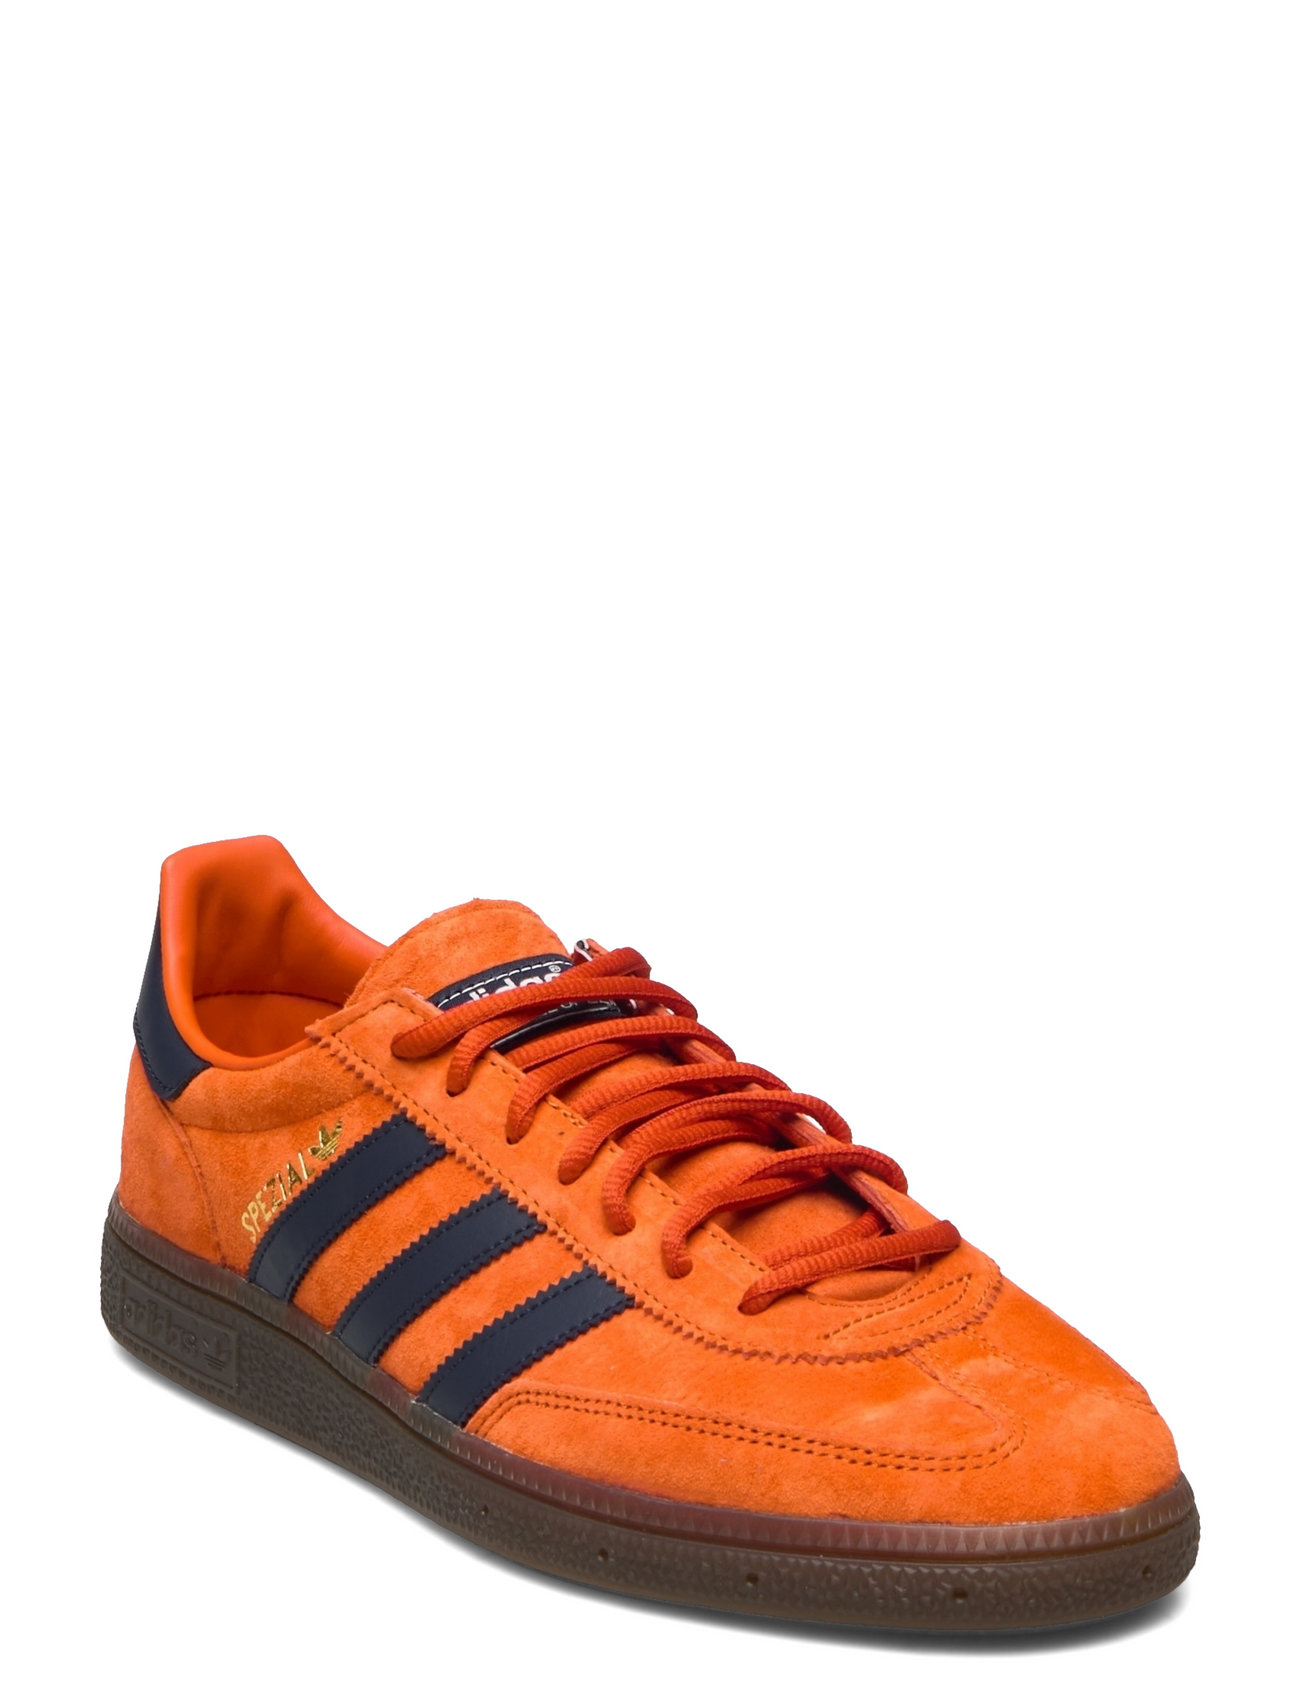 adidas Originals Handball Shoes - sneakers -